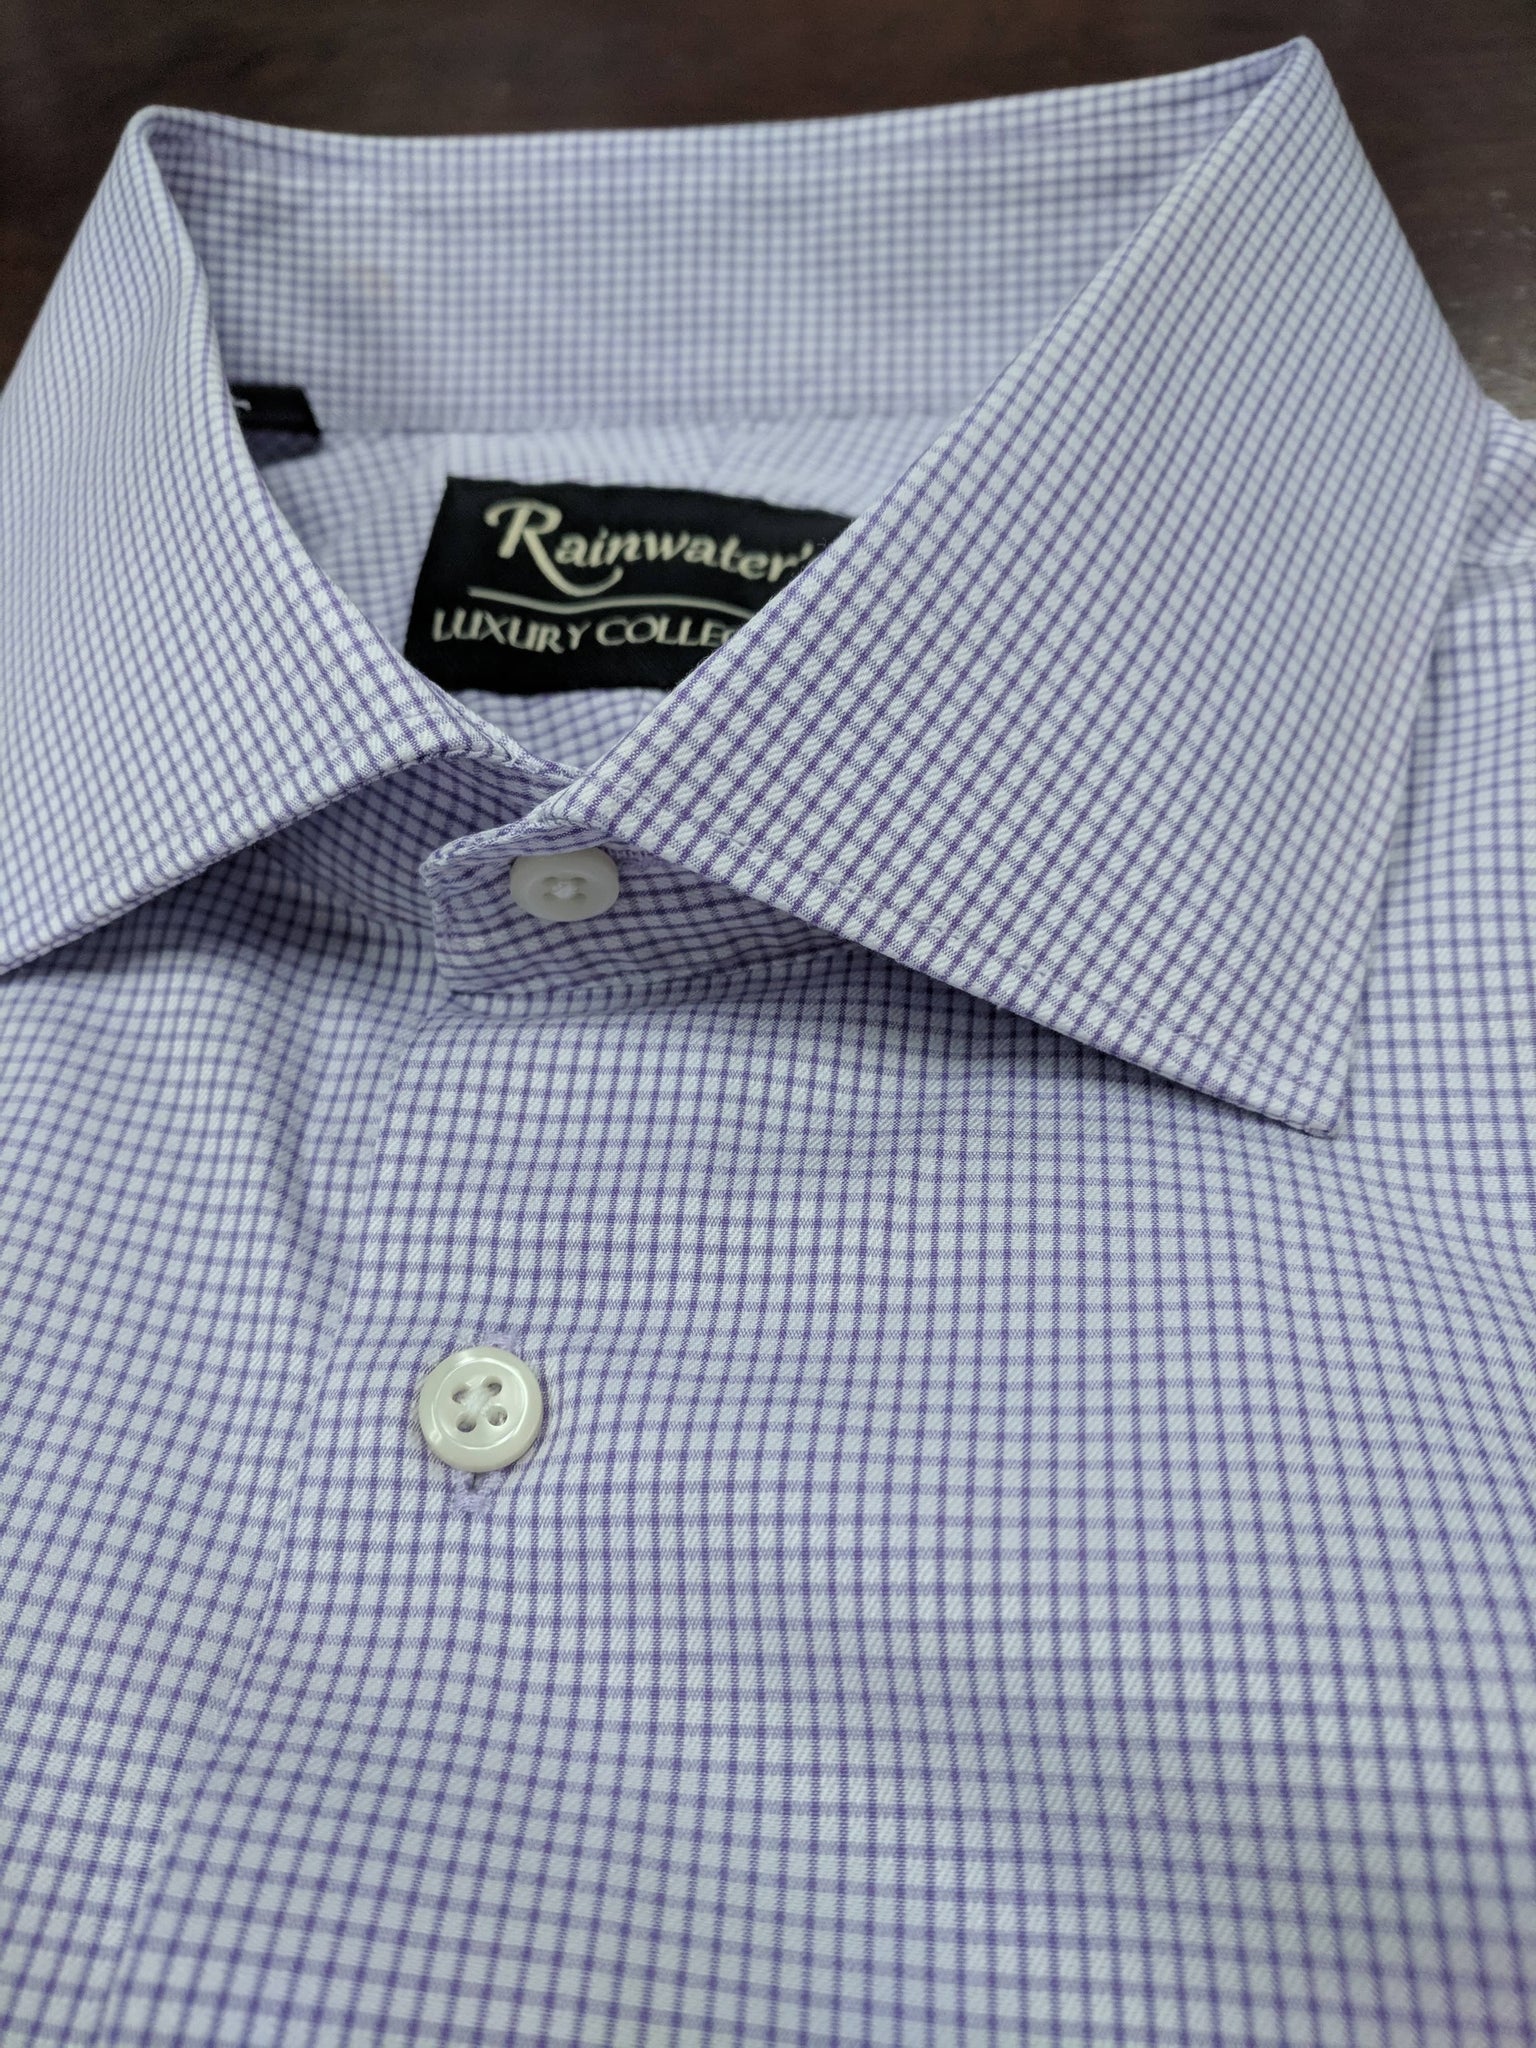 Rainwater's Lavender Mini Check Dress Shirt - Rainwater's Men's Clothing and Tuxedo Rental